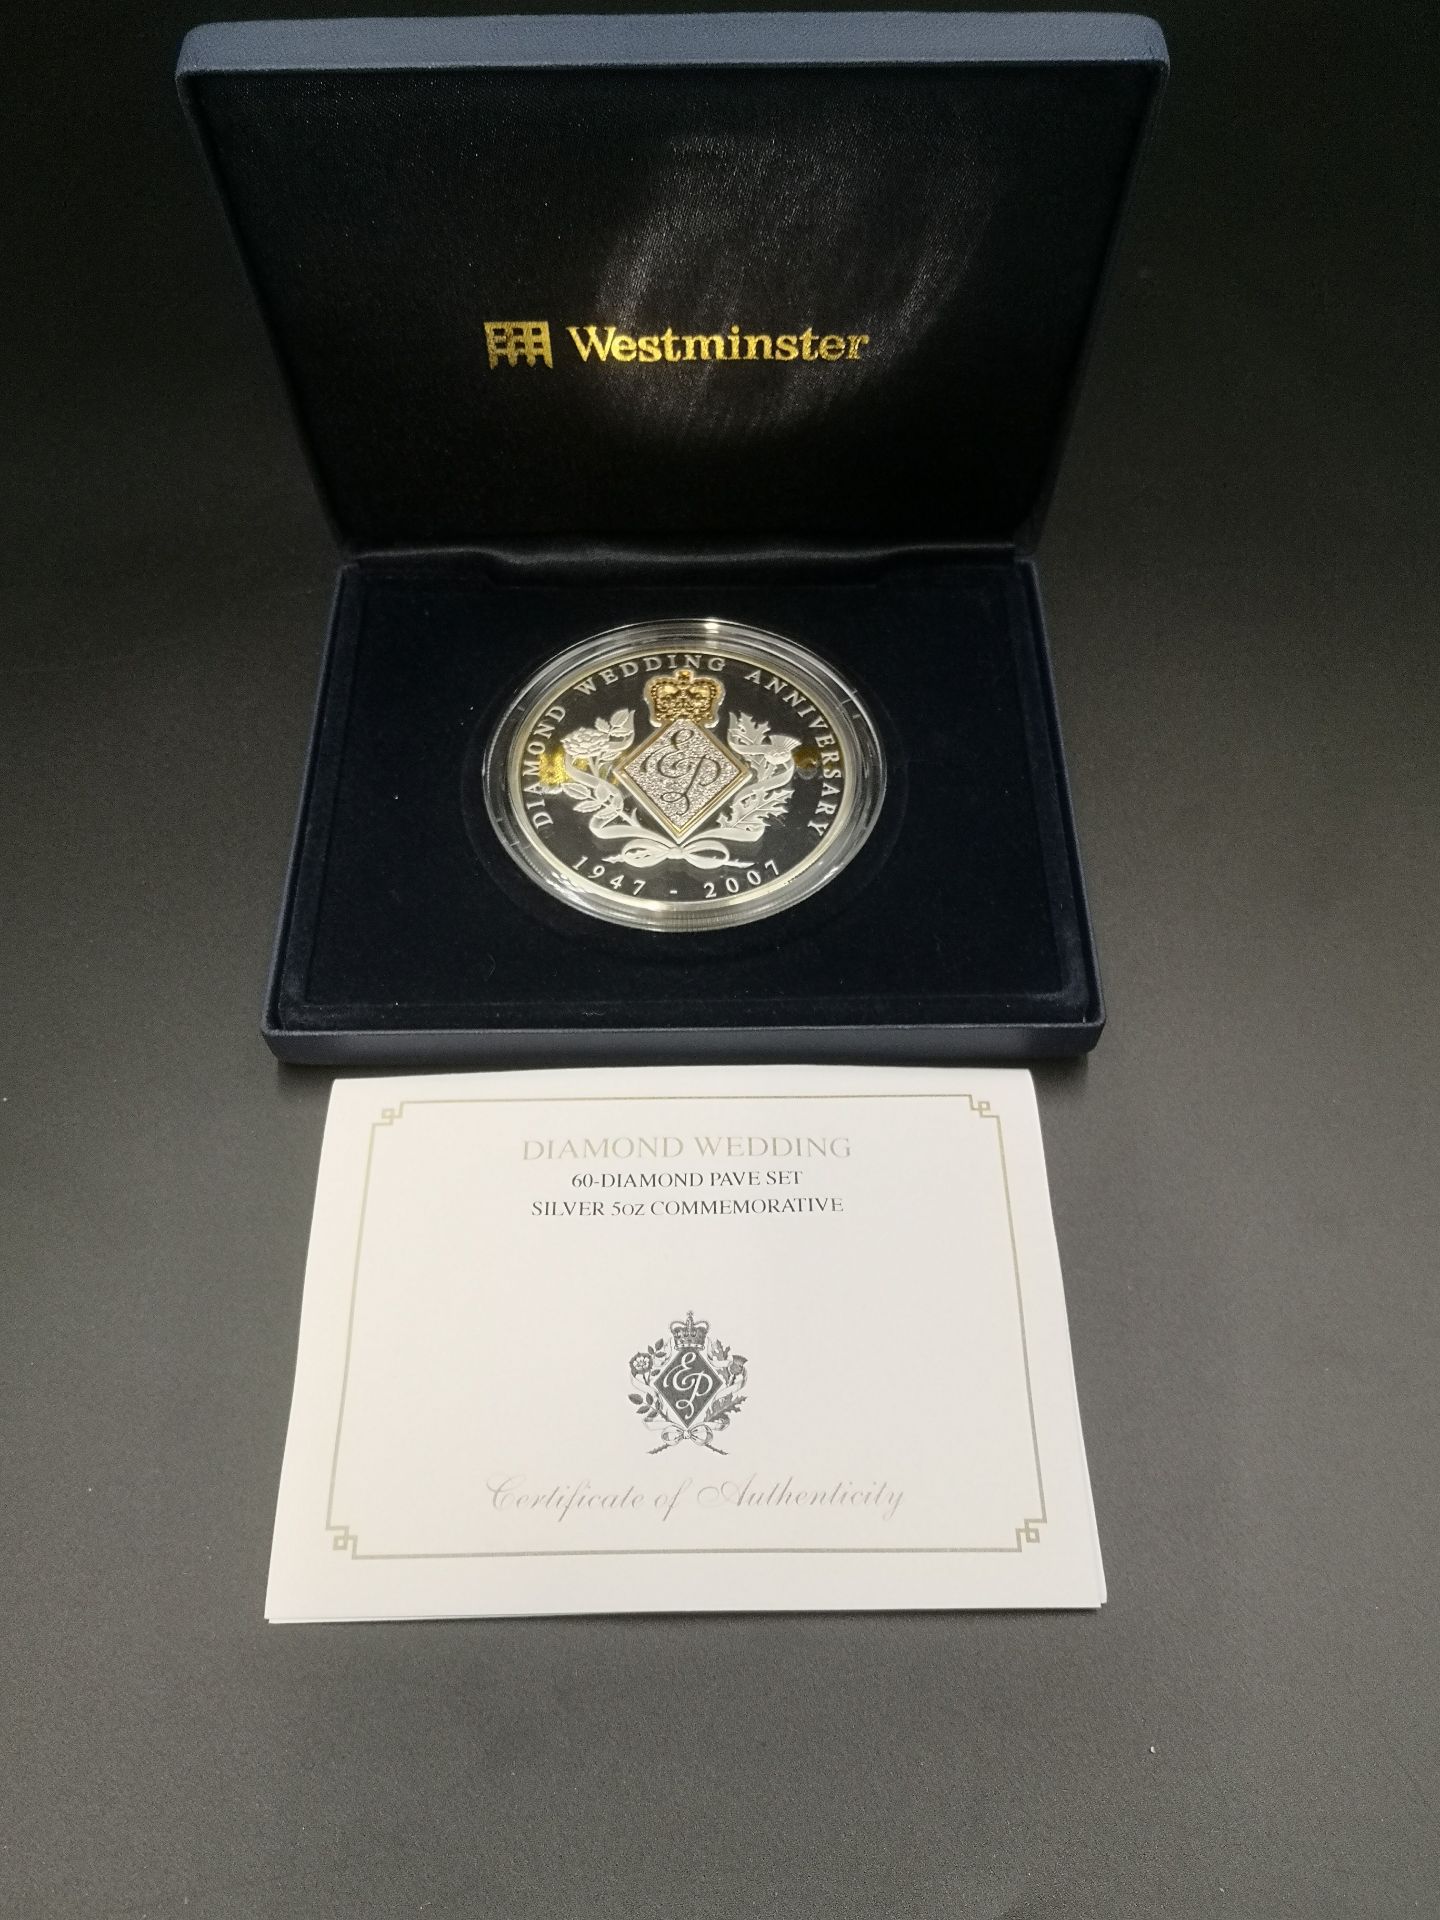 Westminster Diamond Wedding silver commemorative coin